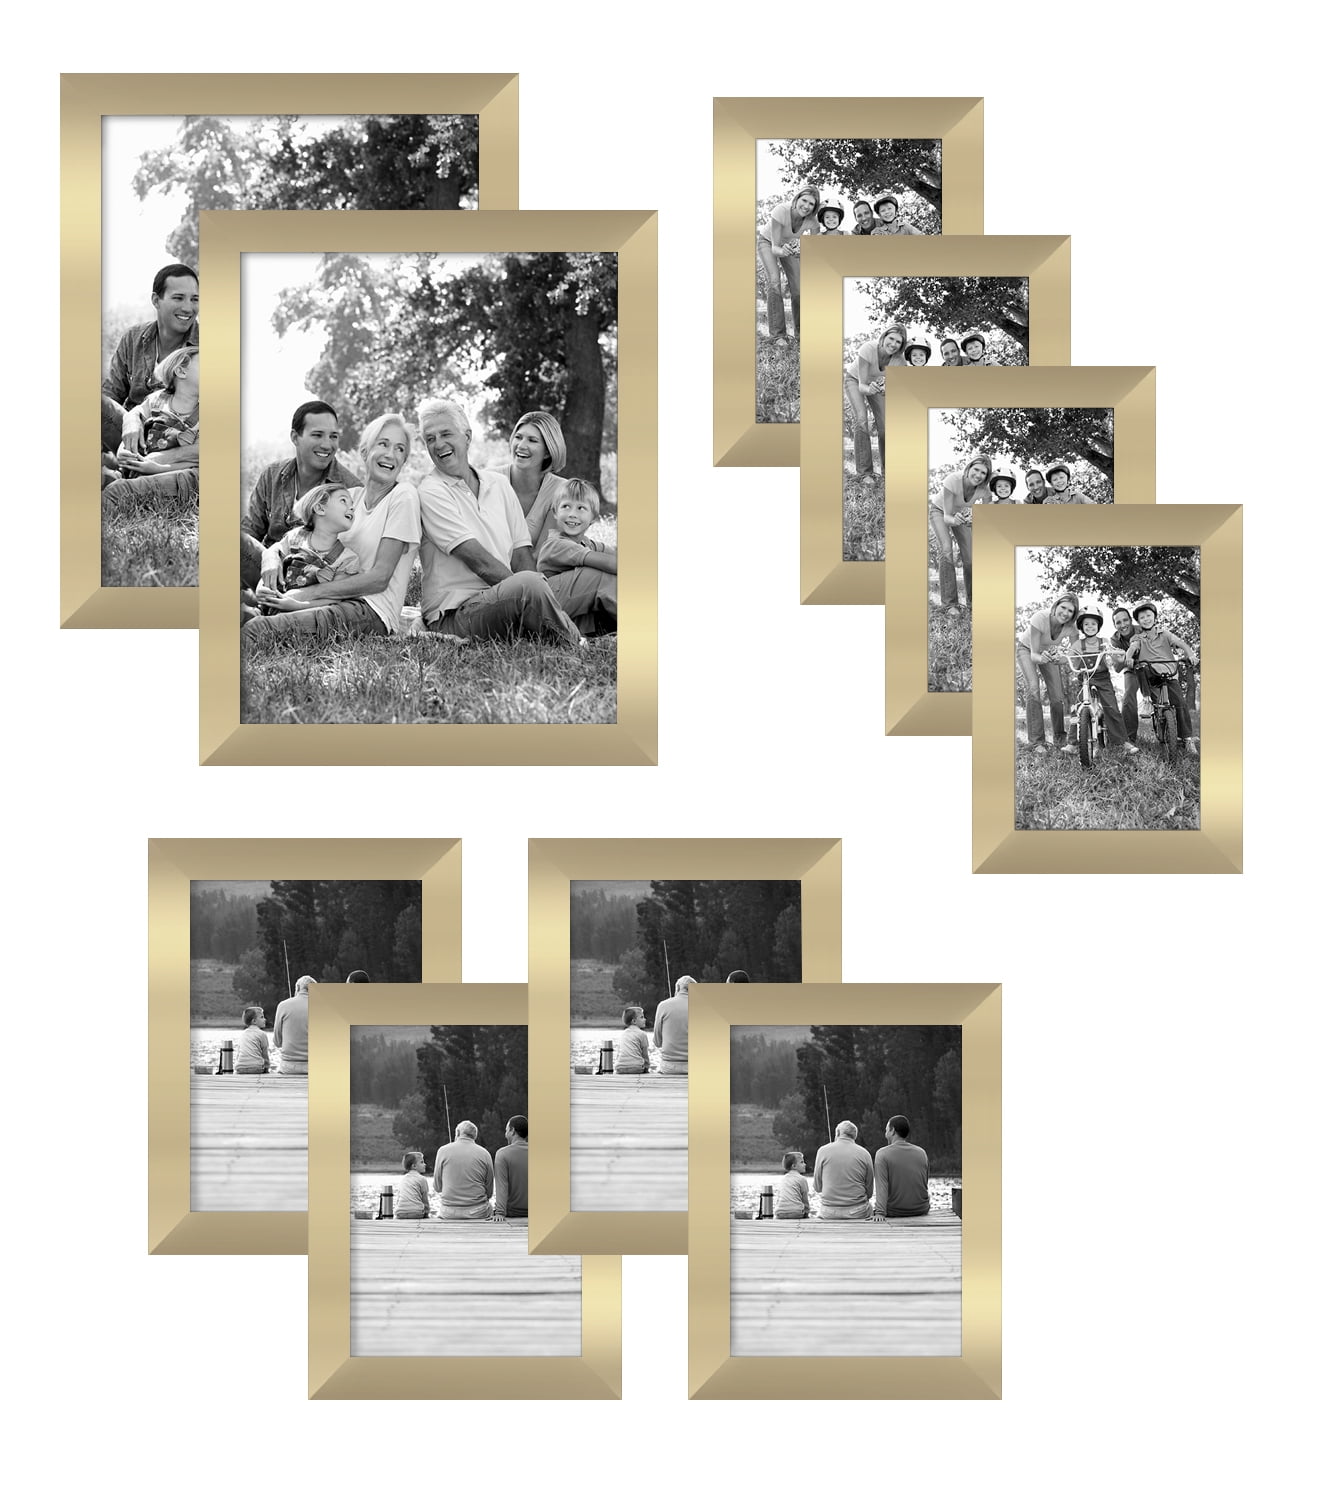 4x6 5x7 8x10 11x14 Frames Rustic Wood Picture Frame & Photo Frame Set Bulk  Gifts